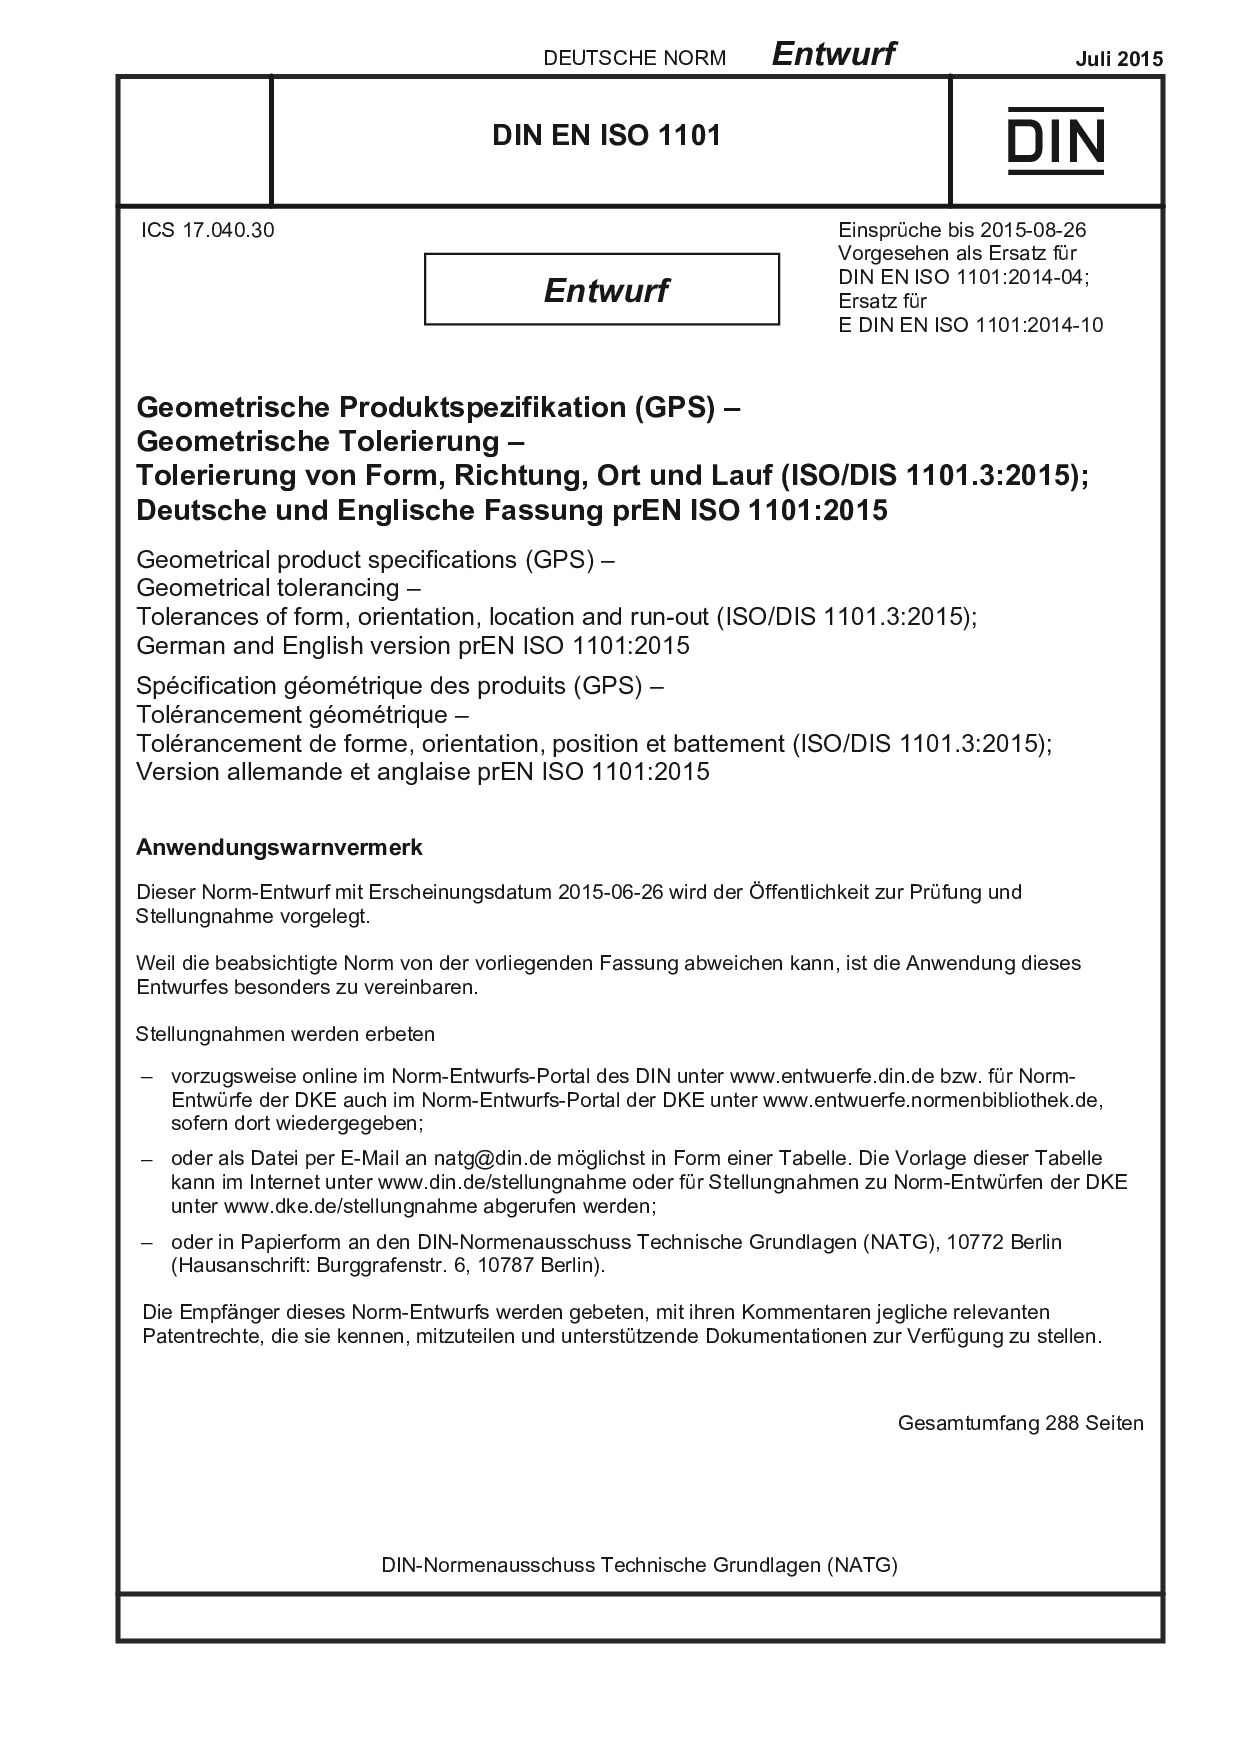 DIN EN ISO 1101 E:2015-07